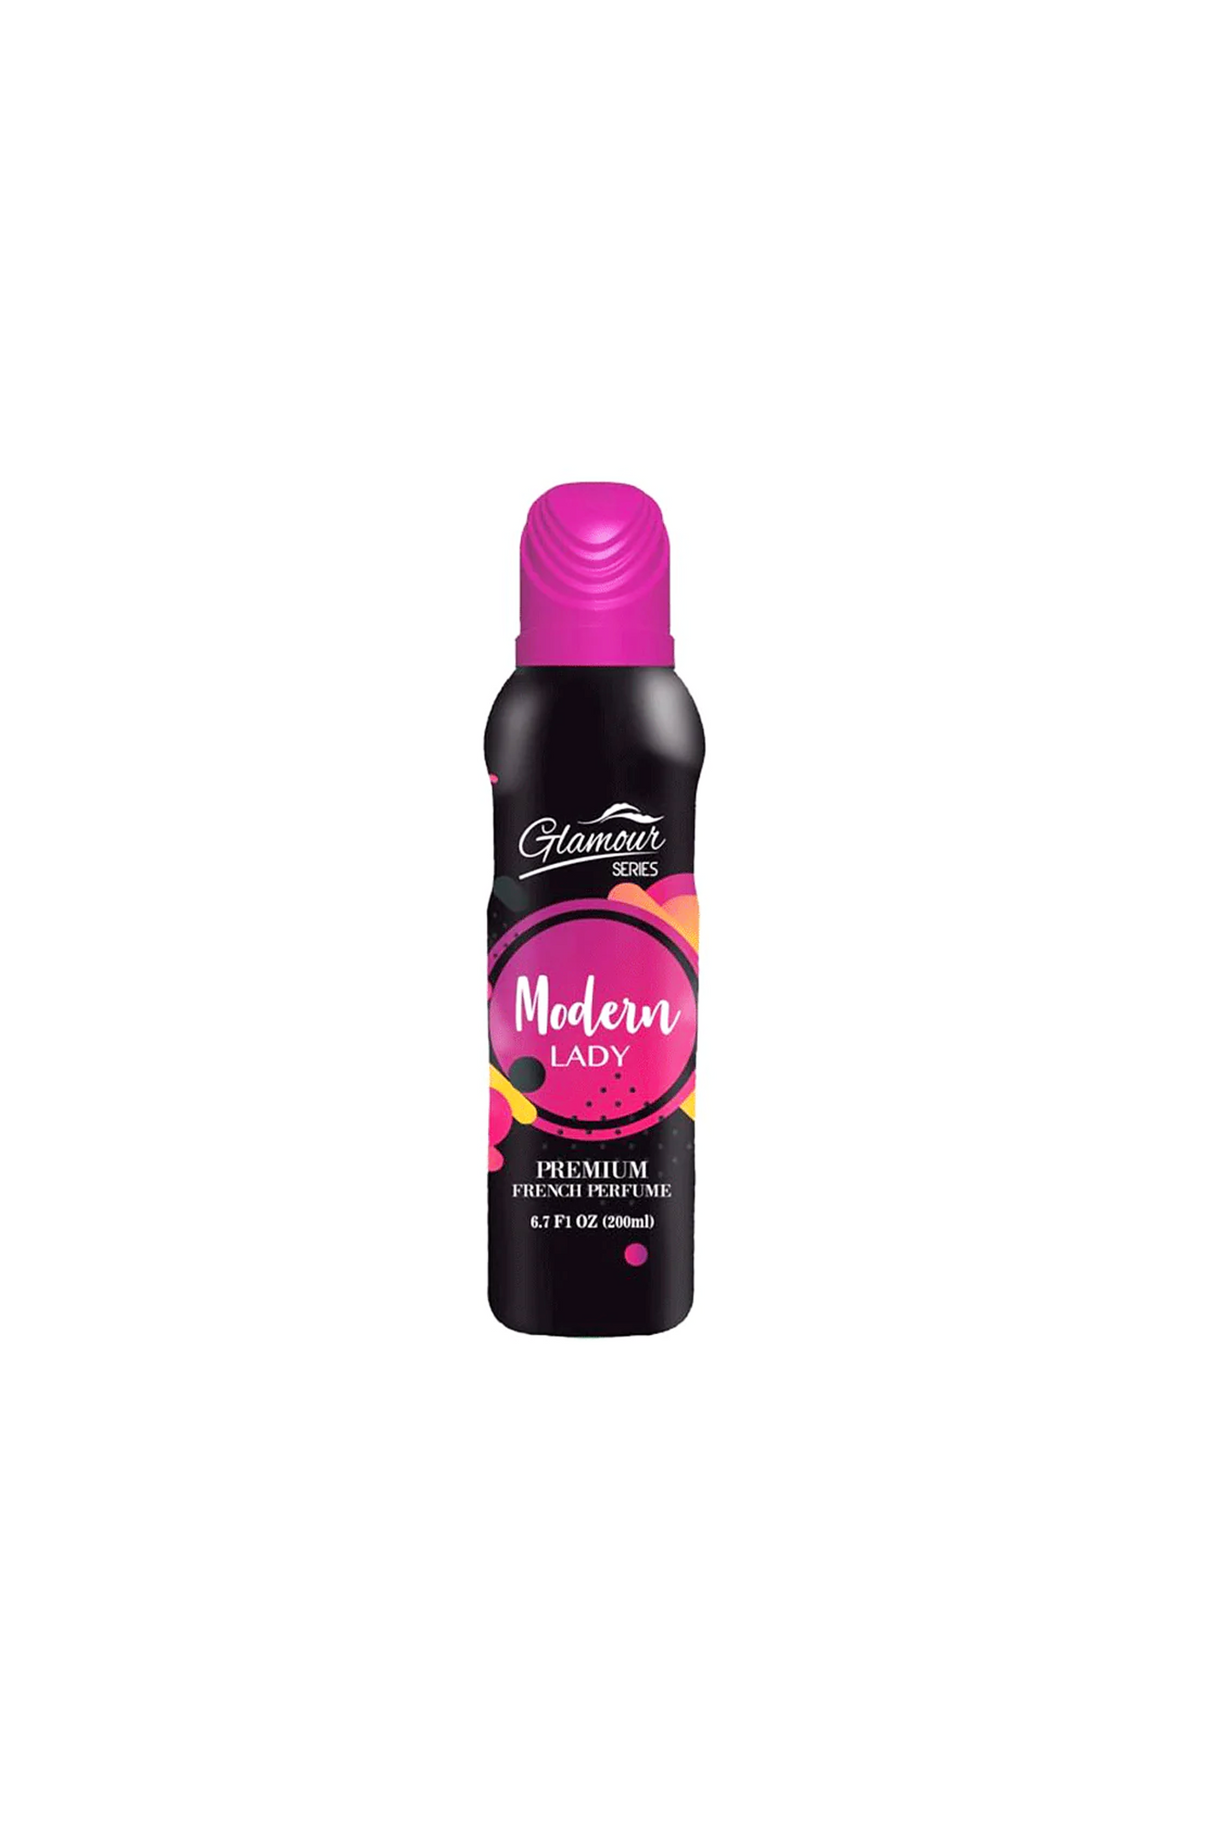 glamour modern lady deodorant body spray 200ml for women